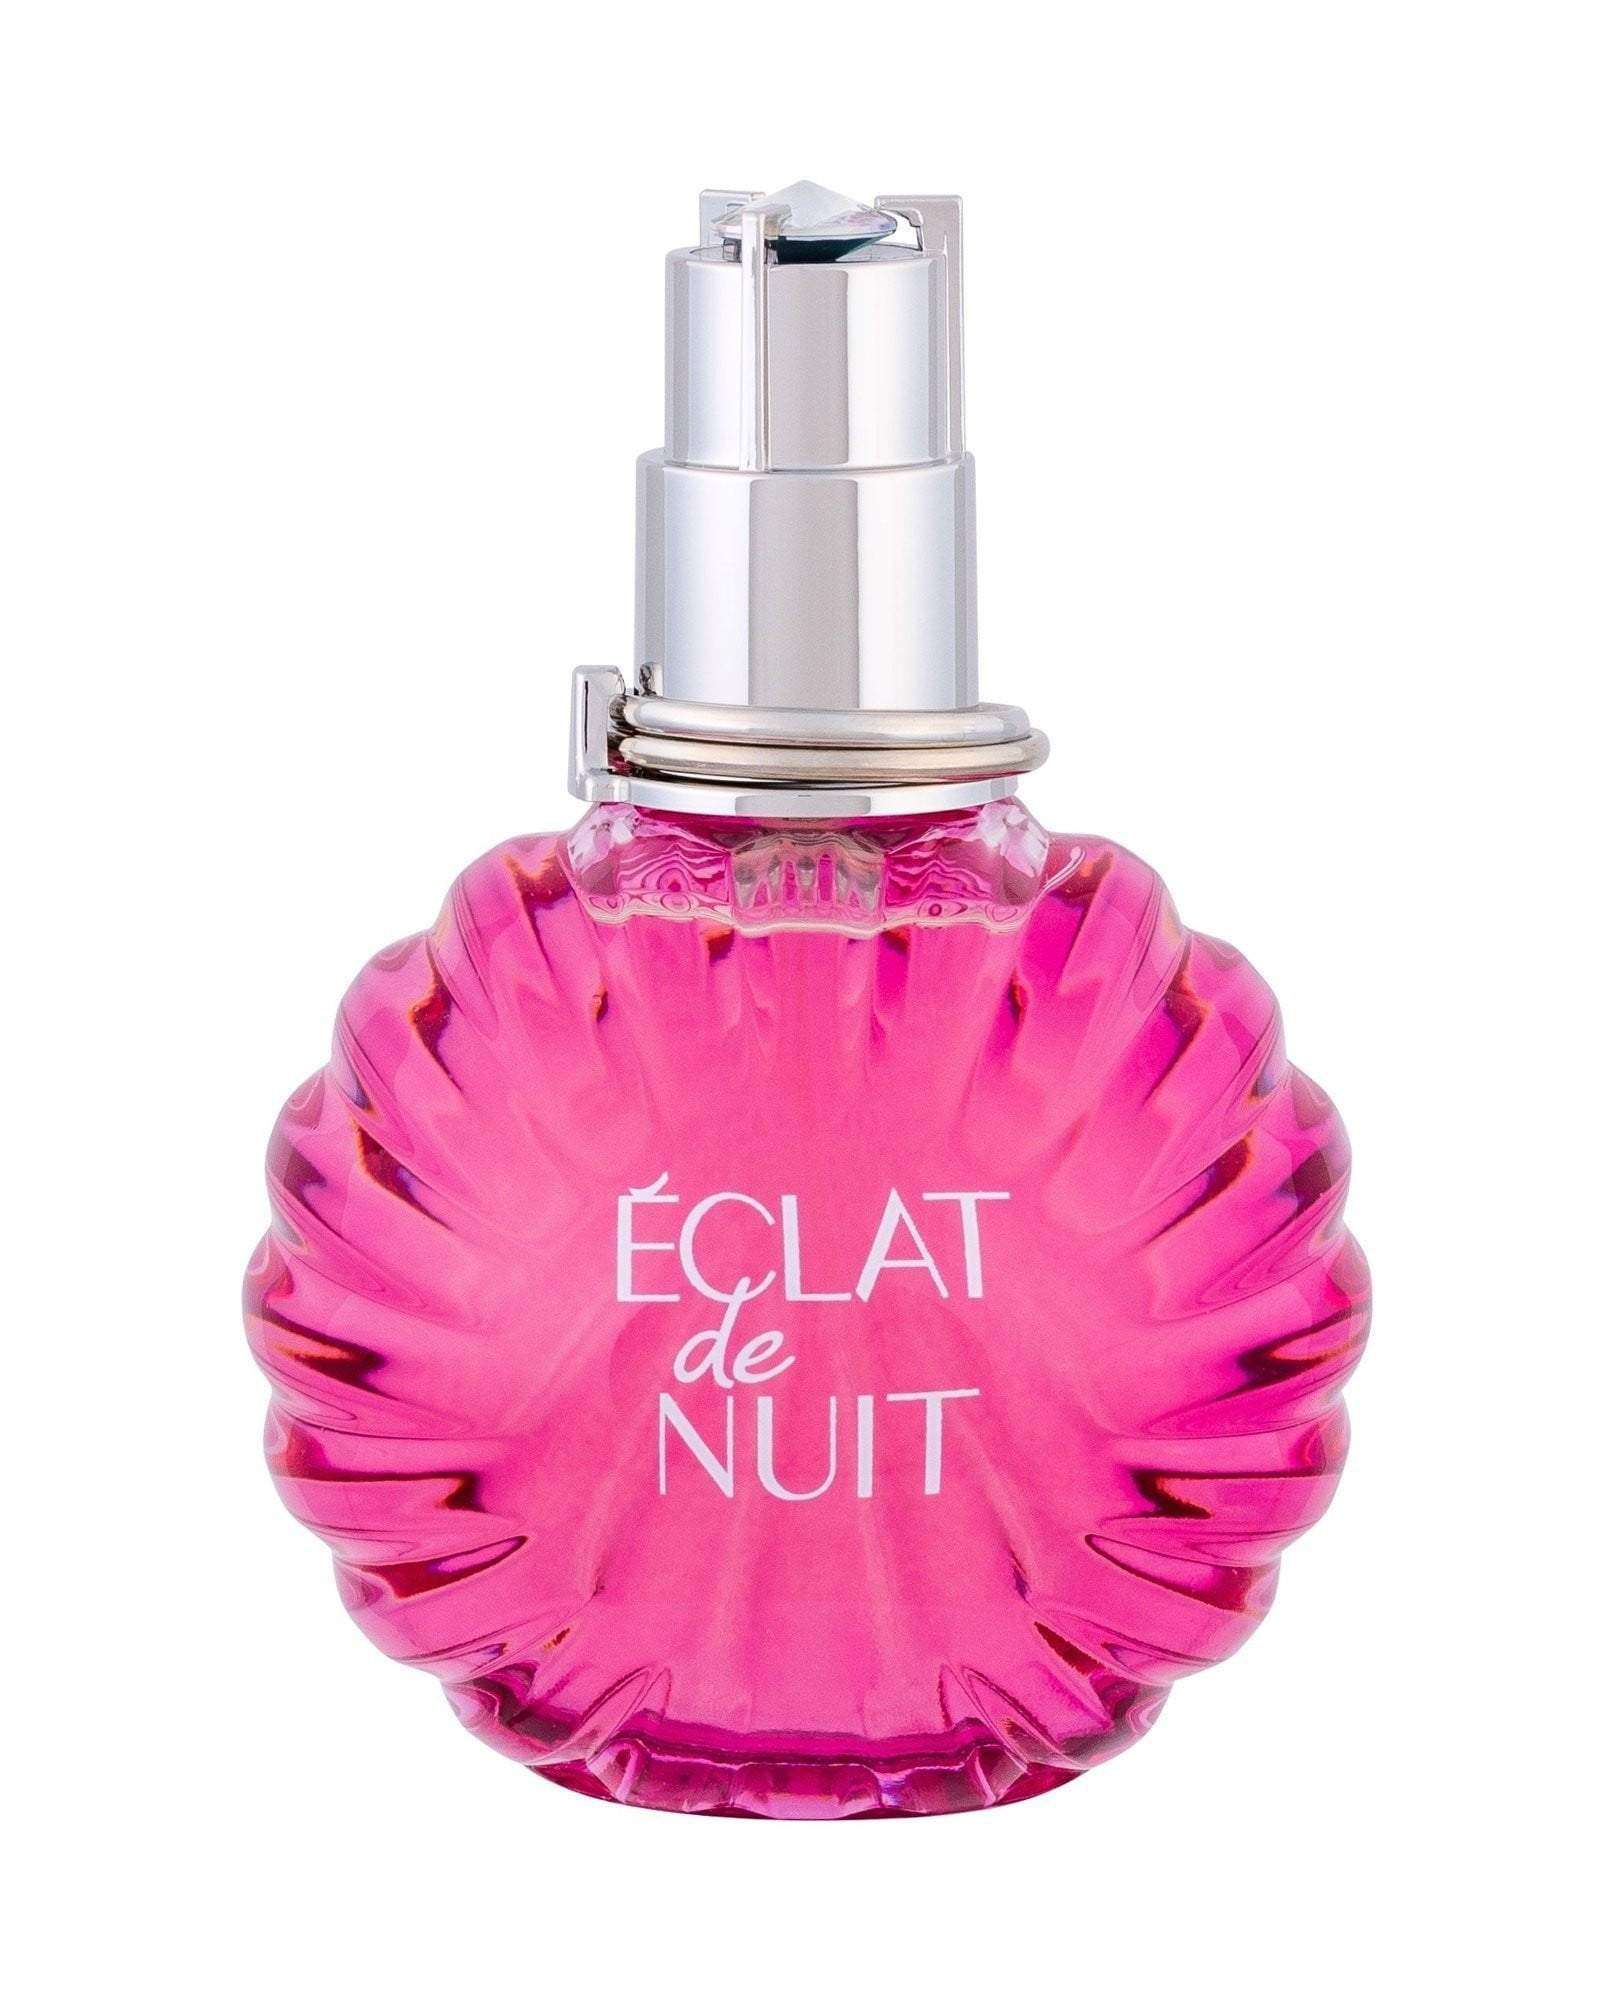 Lanvin Eclat de Nuit - 100ml EDP | Buy Perfume Online | My Perfume